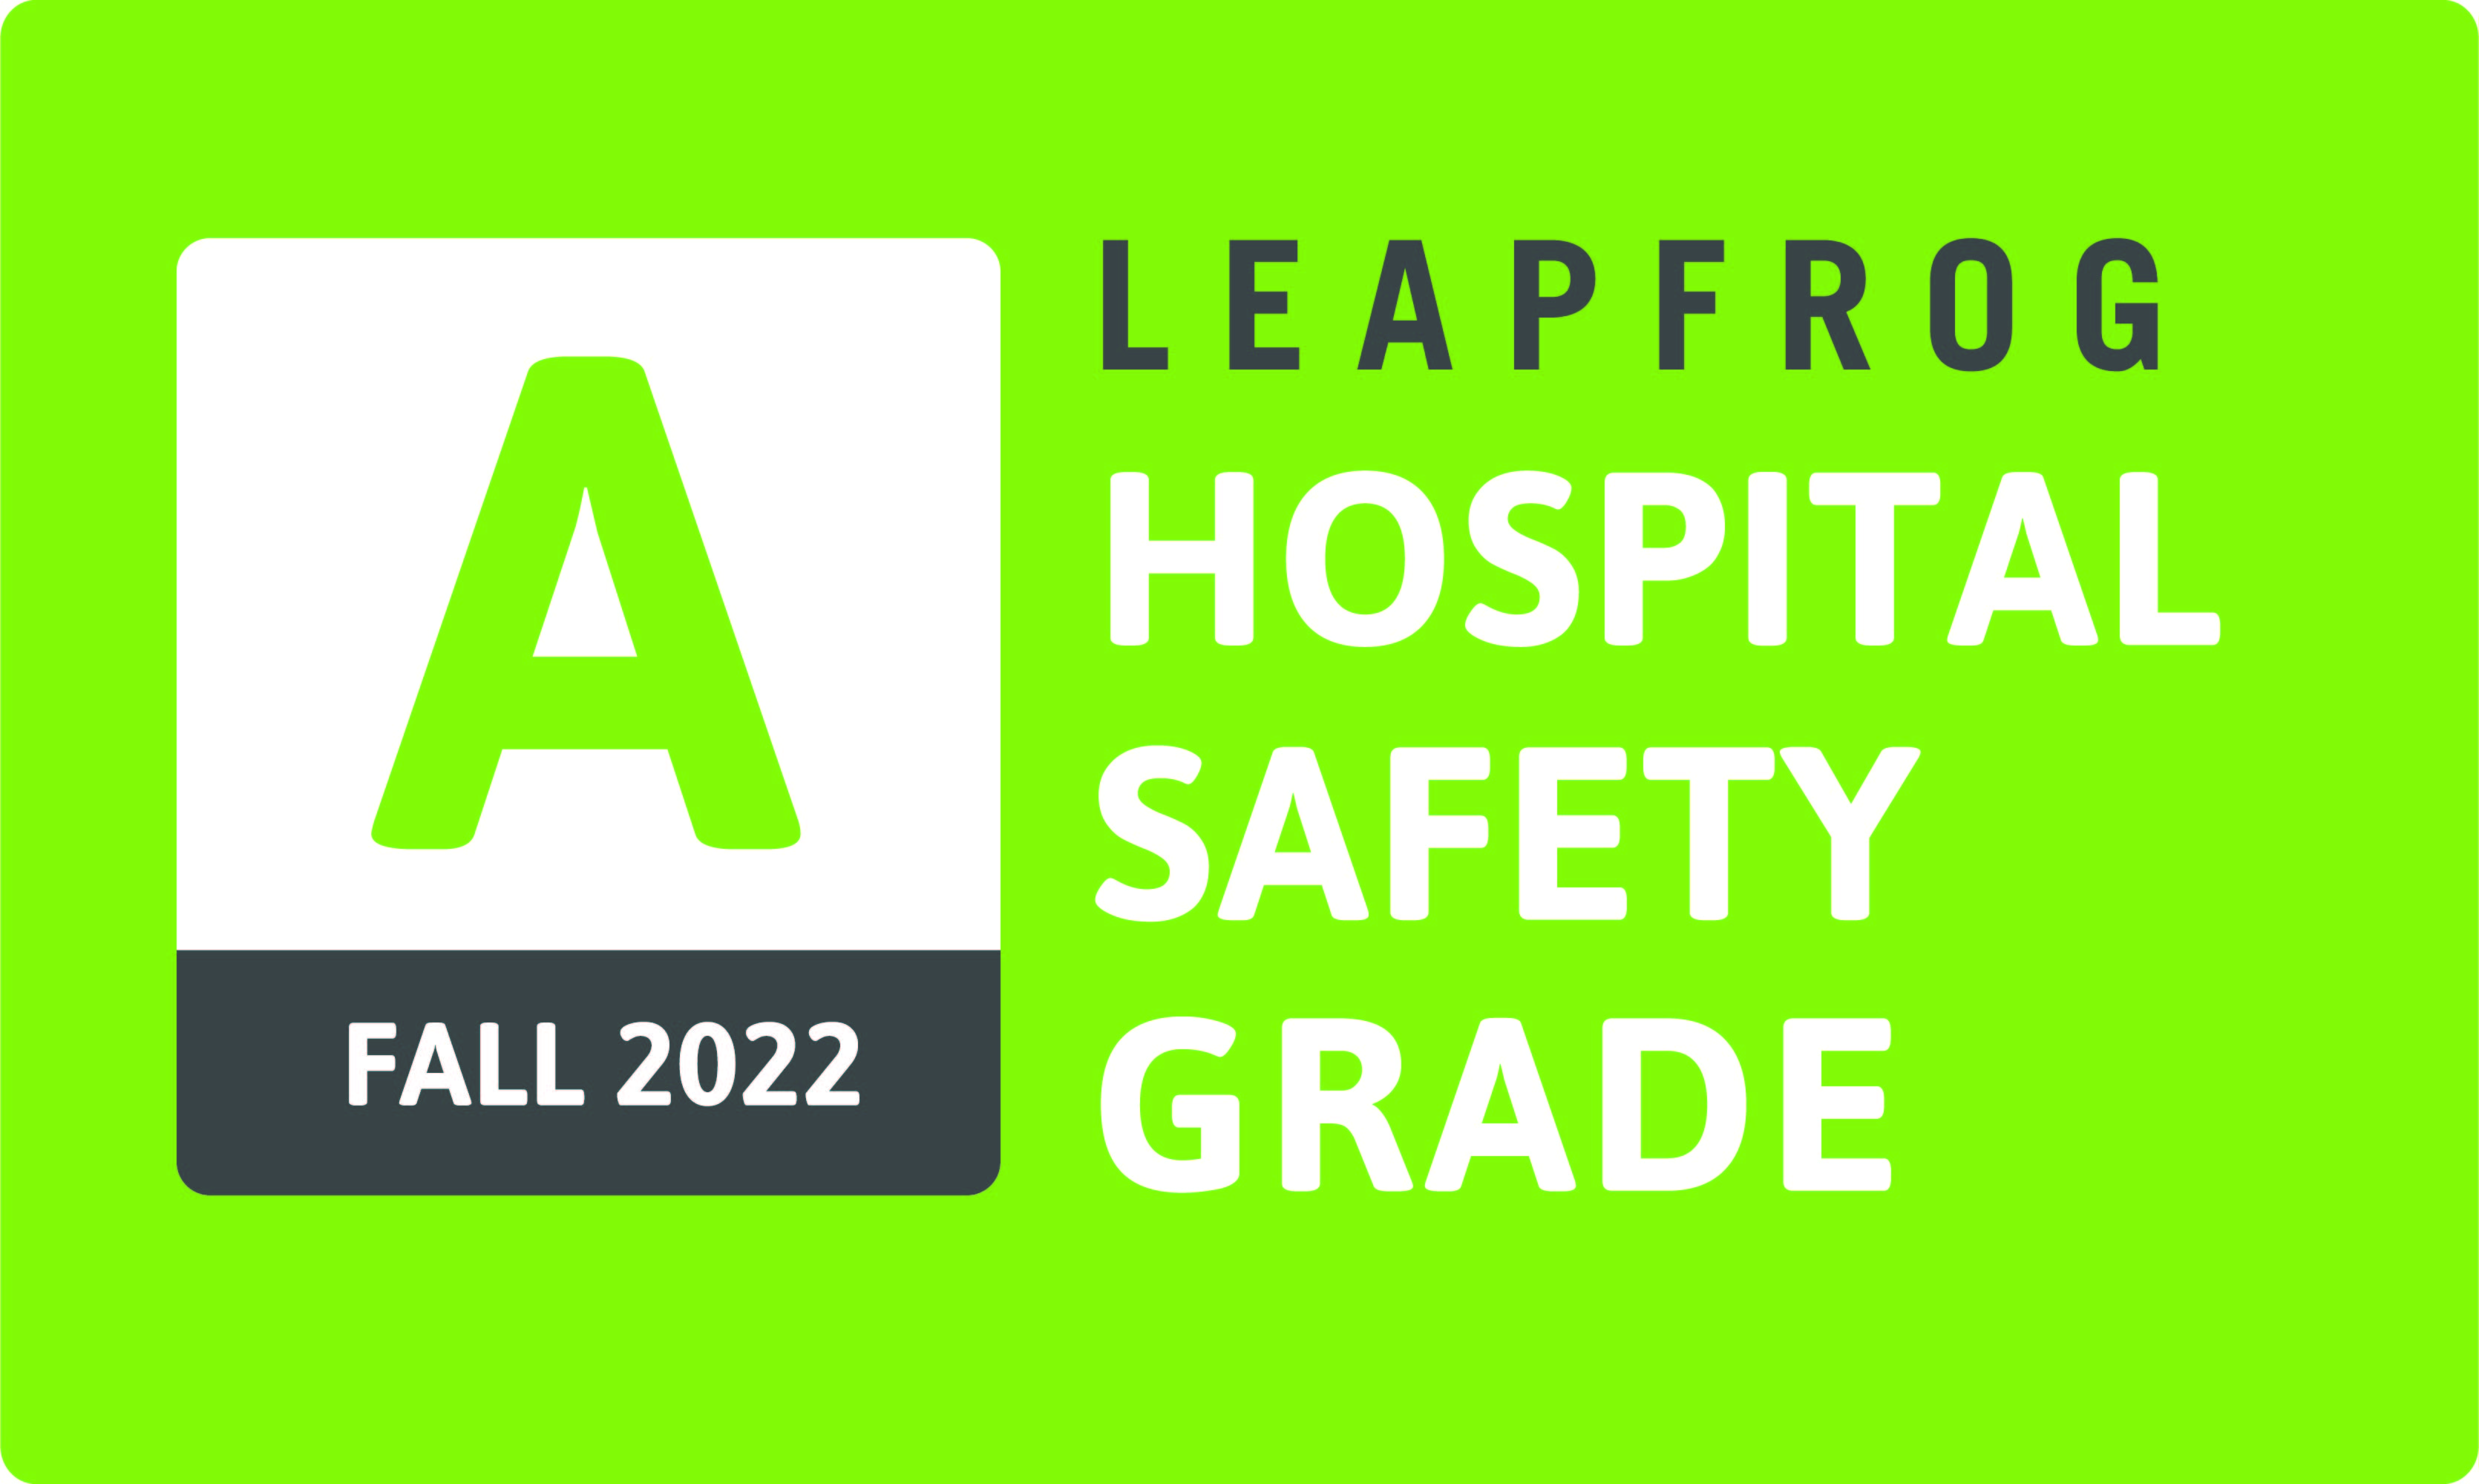 Fall 2022 Leapfrog Hospital Safety Grade